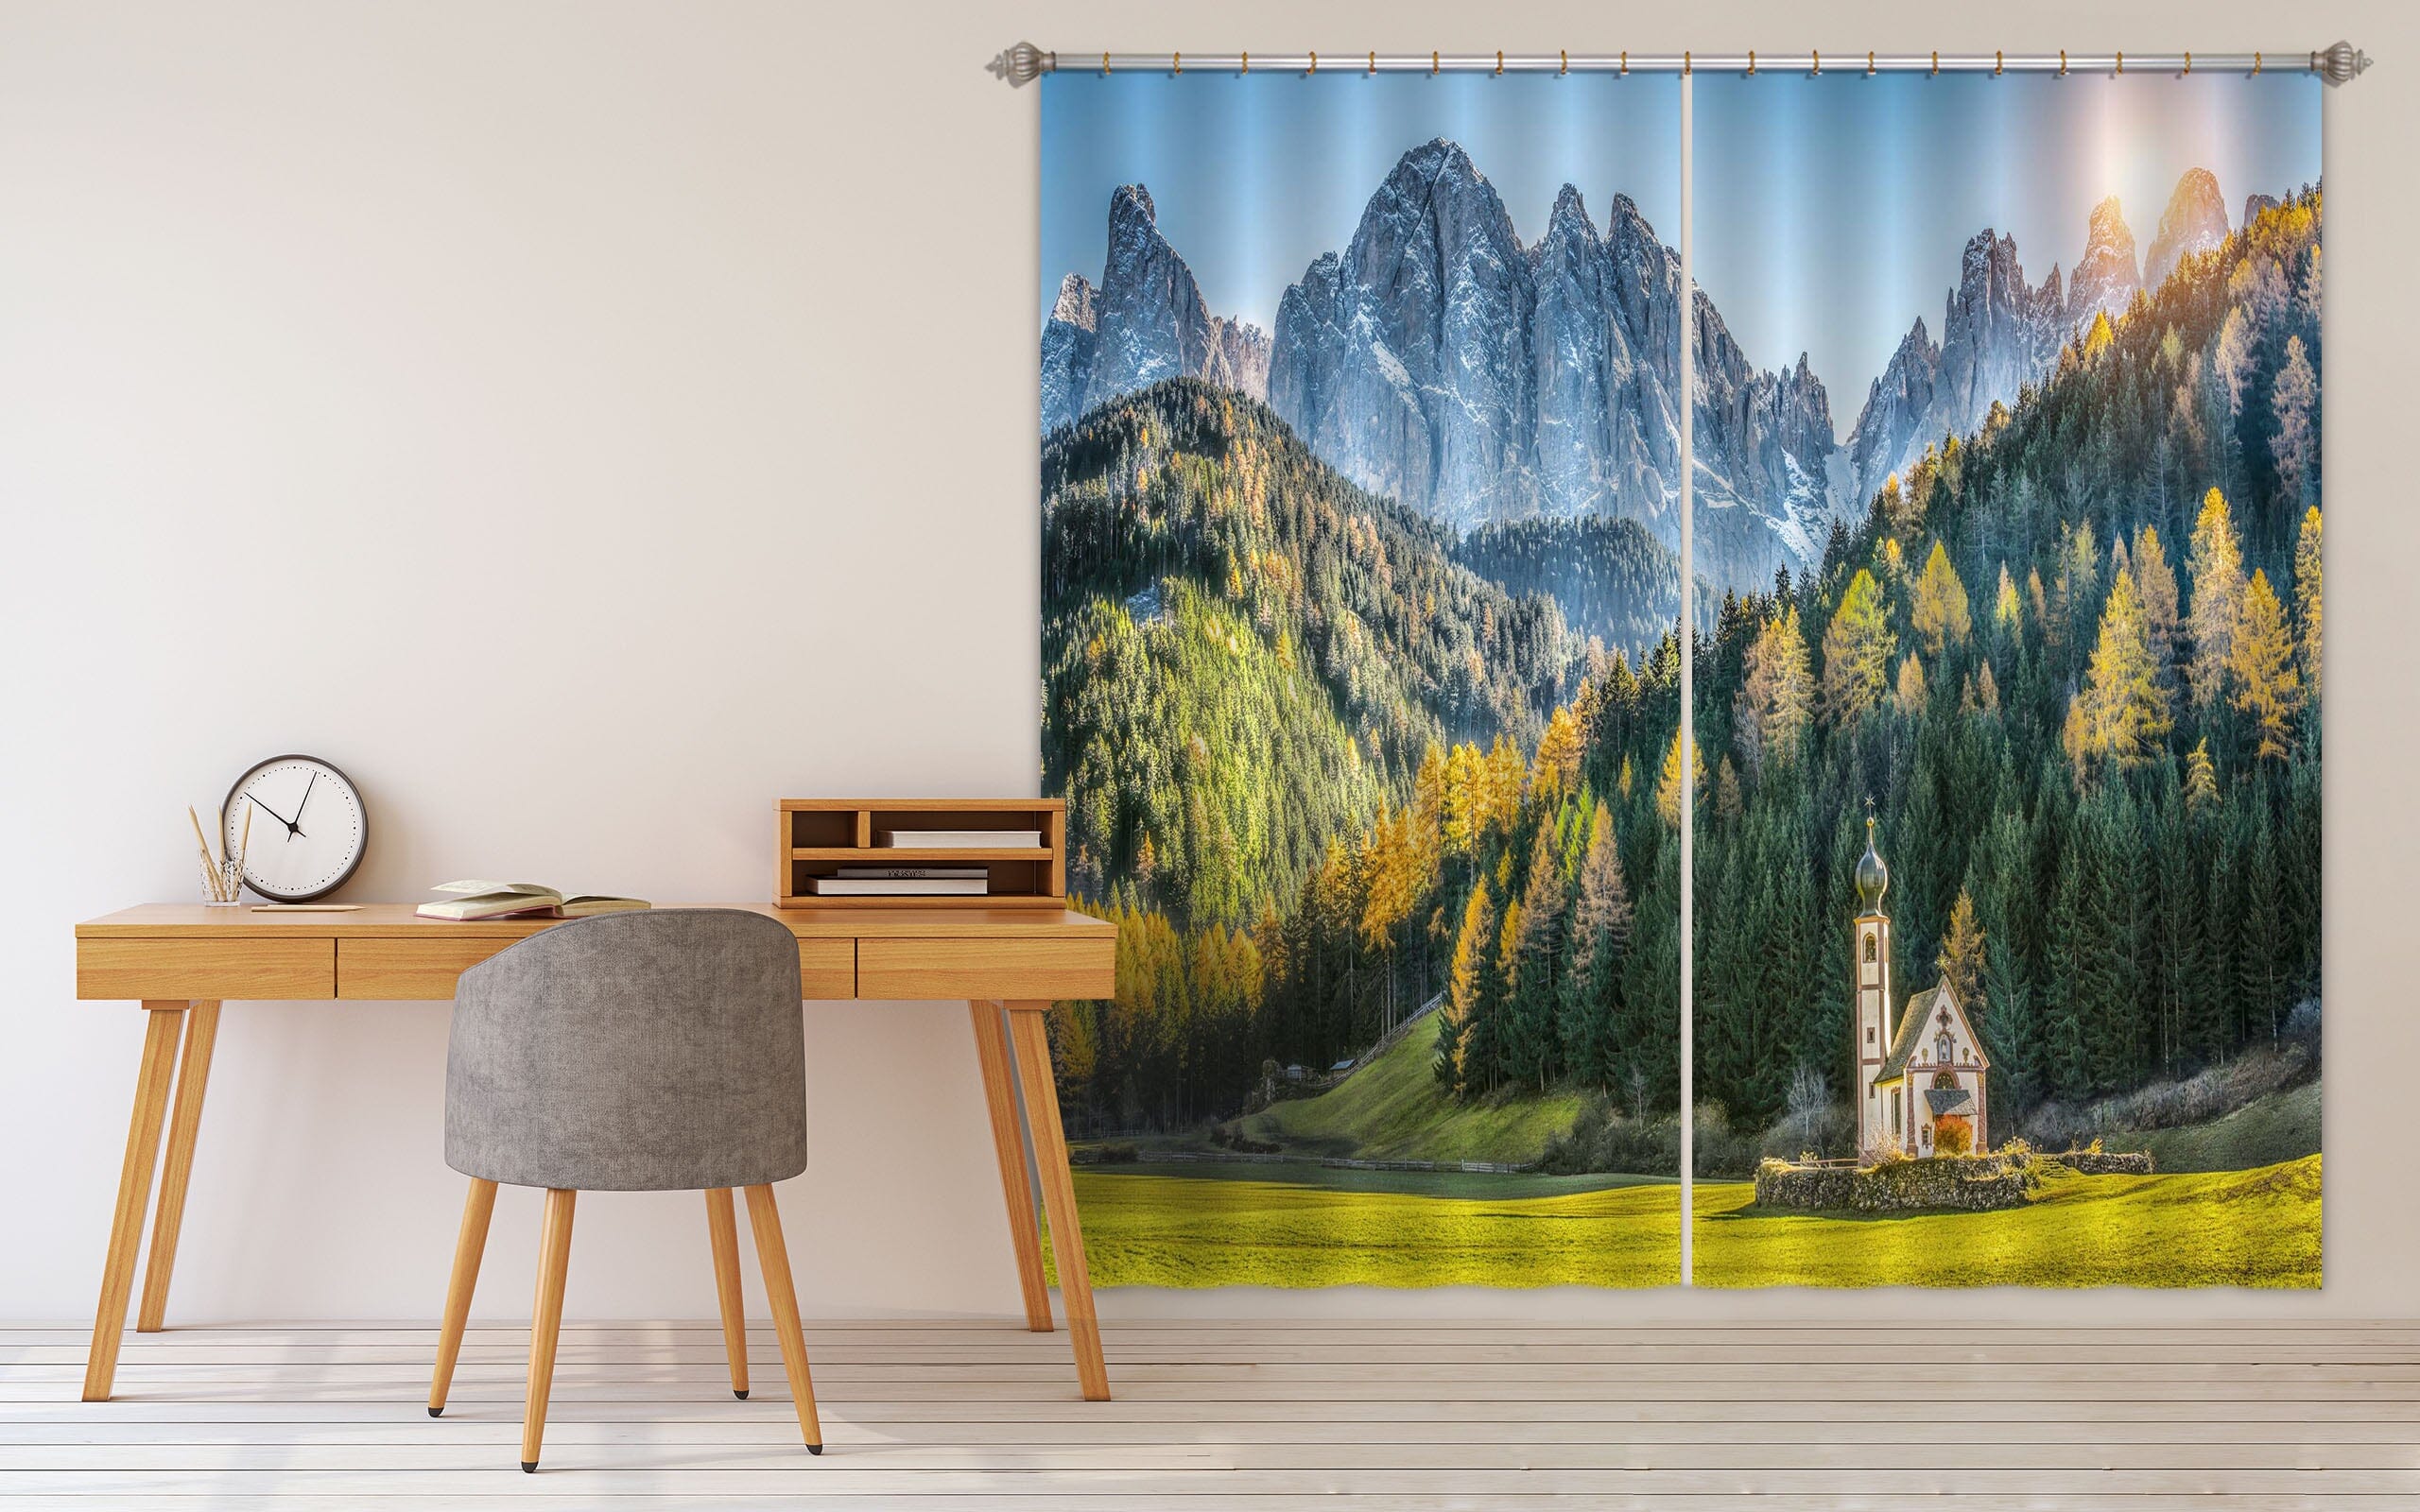 3D Sunny Forest 149 Marco Carmassi Curtain Curtains Drapes Curtains AJ Creativity Home 